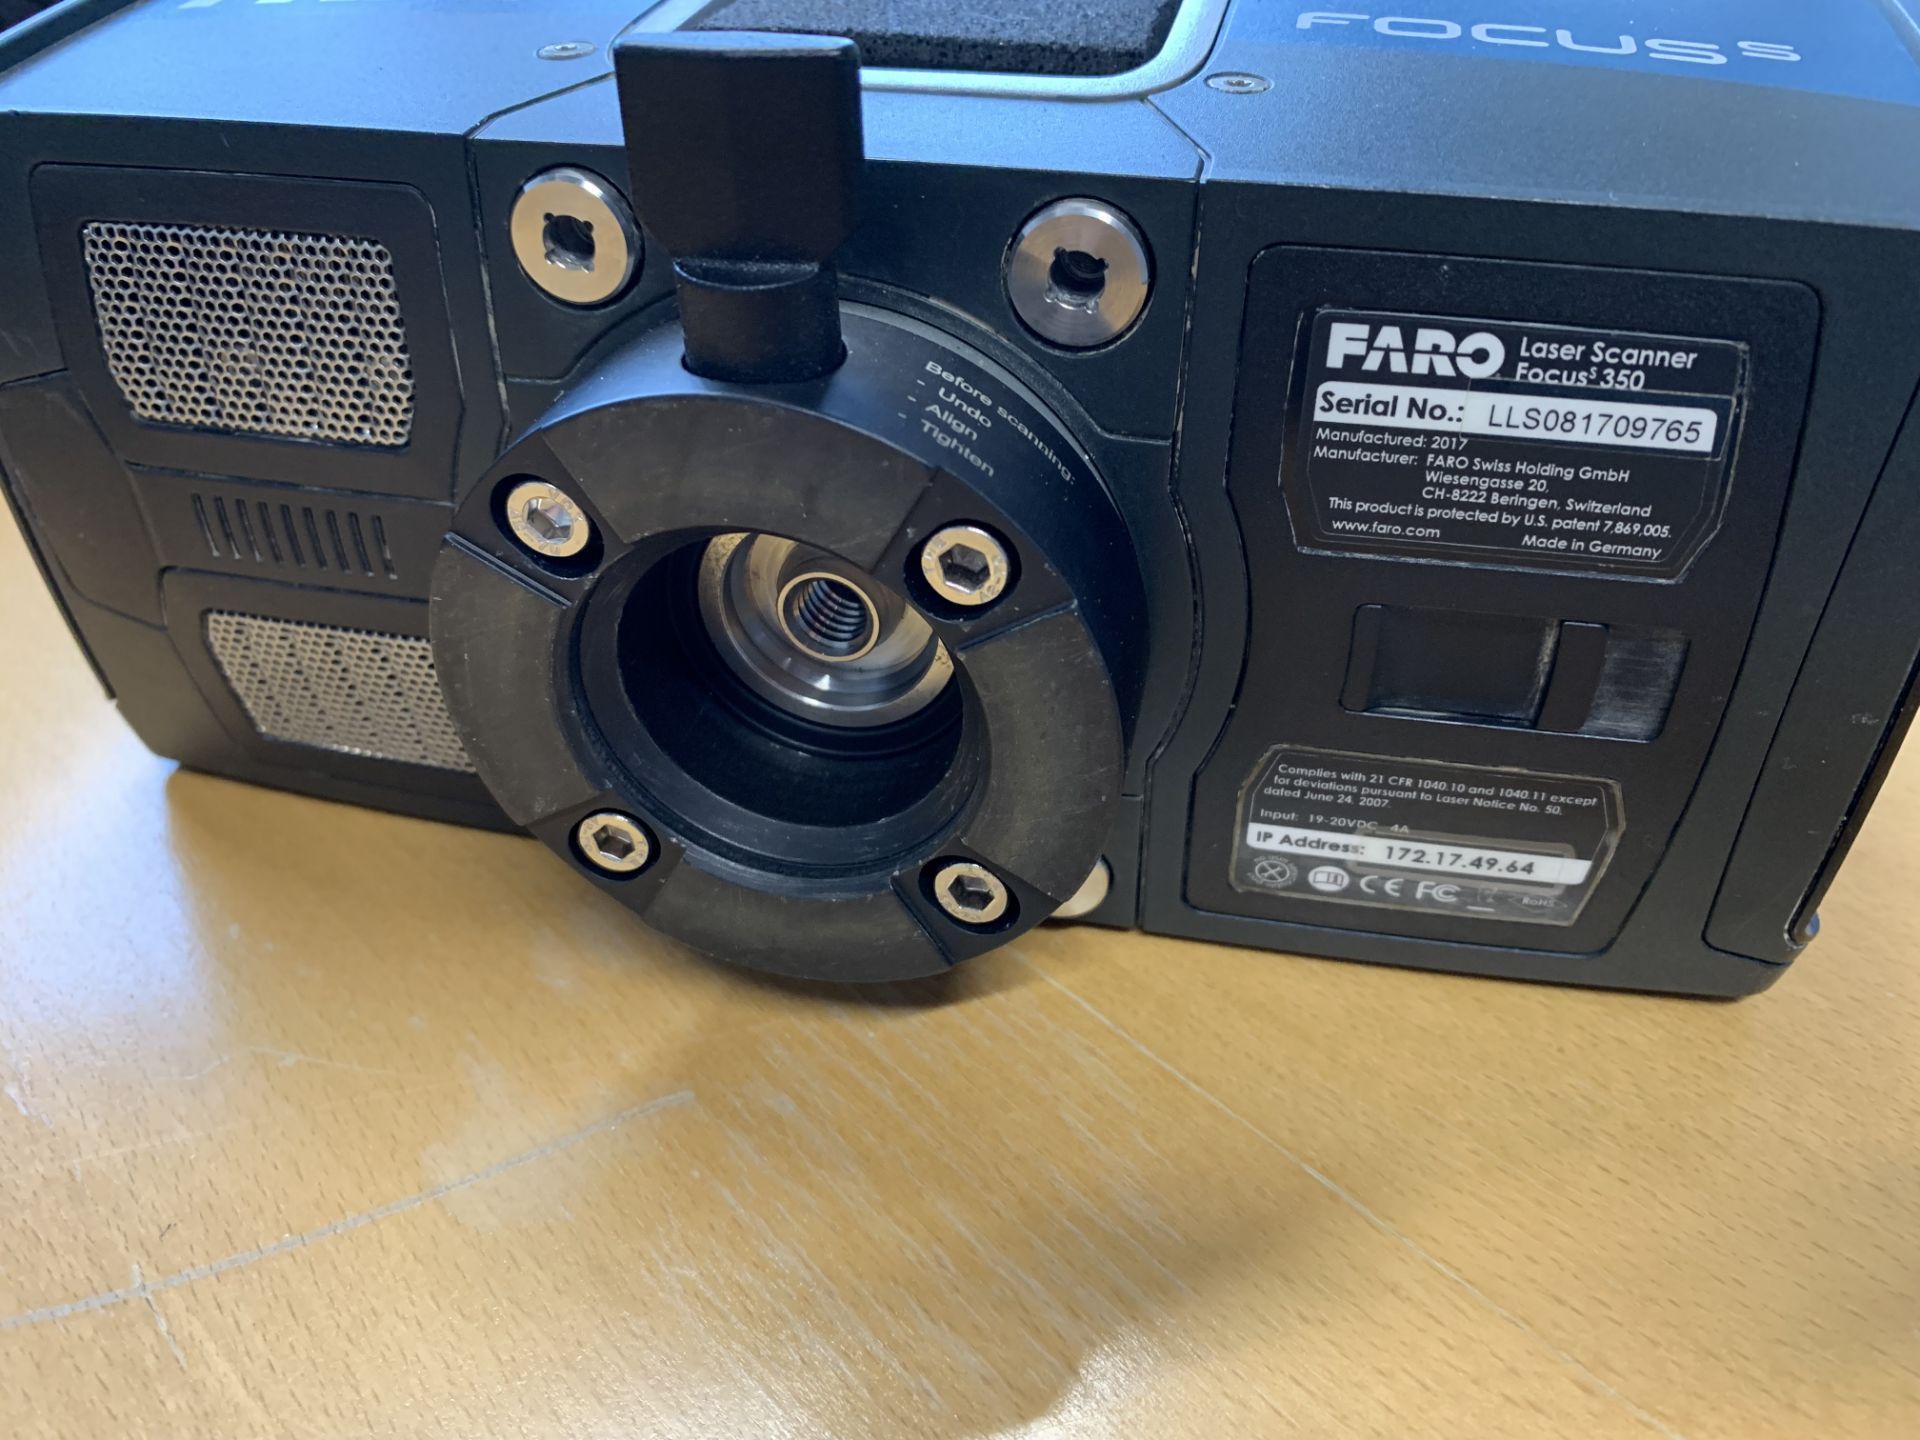 Faro Focus S 350 Laser Scanner - Image 2 of 7